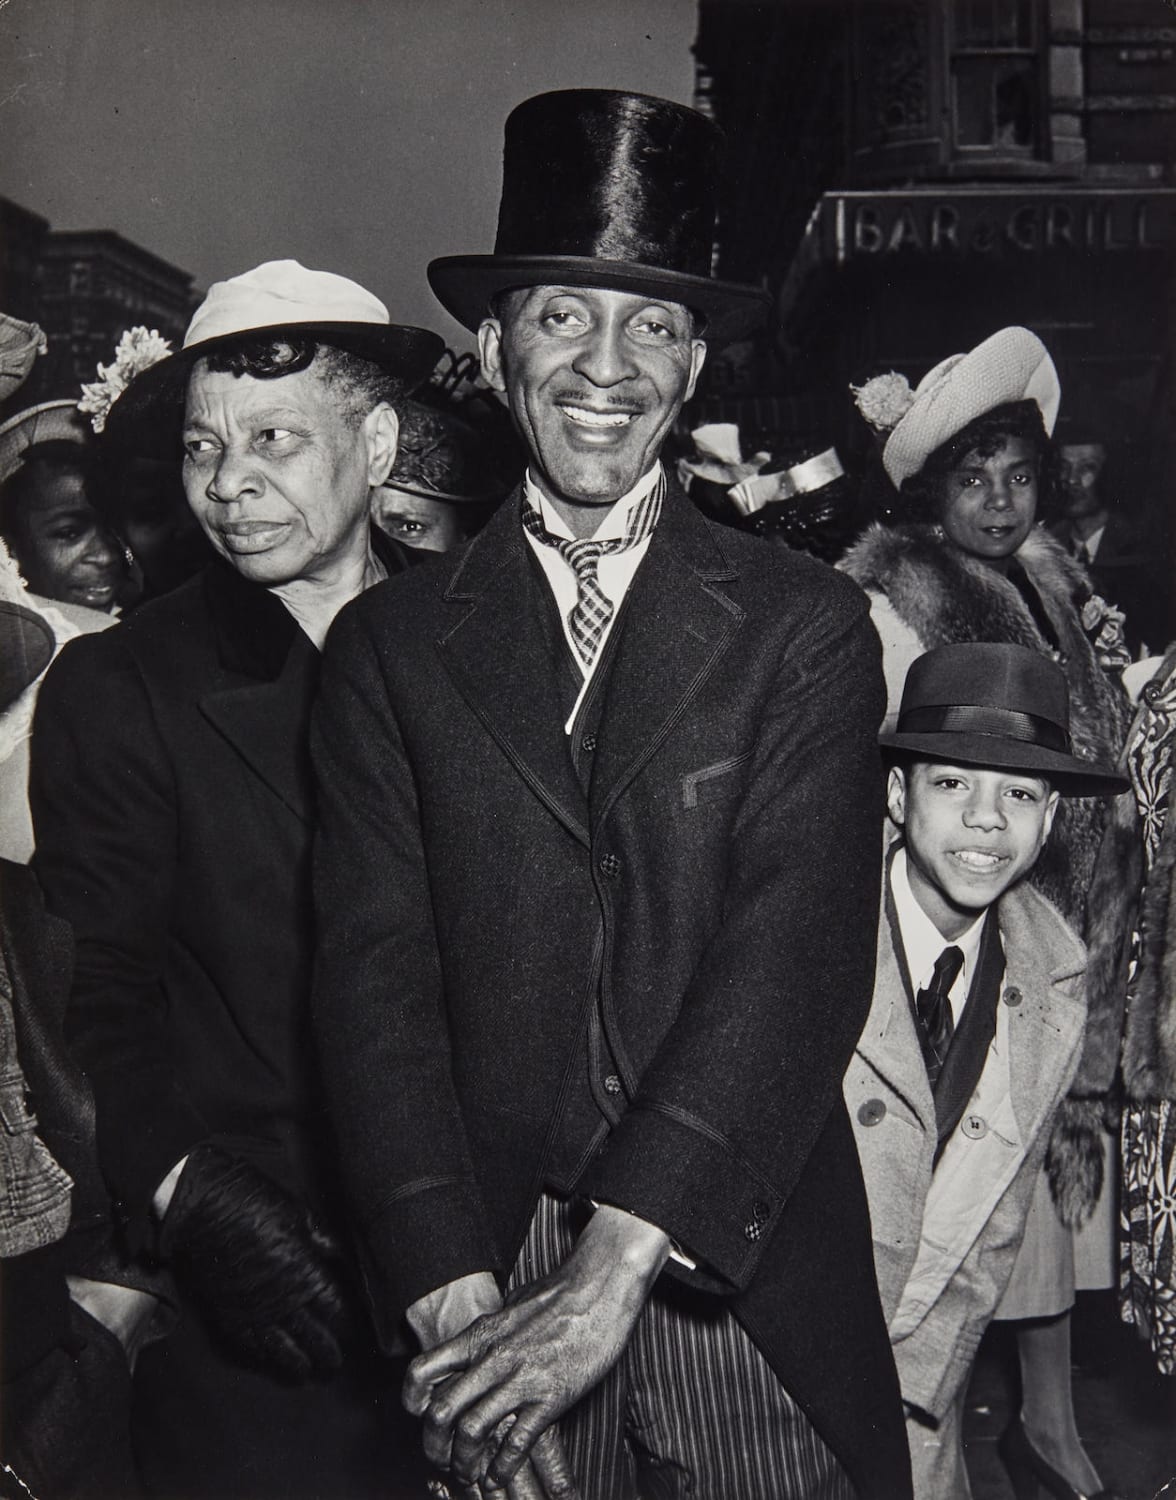 Easter Sunday in Harlem, 1940